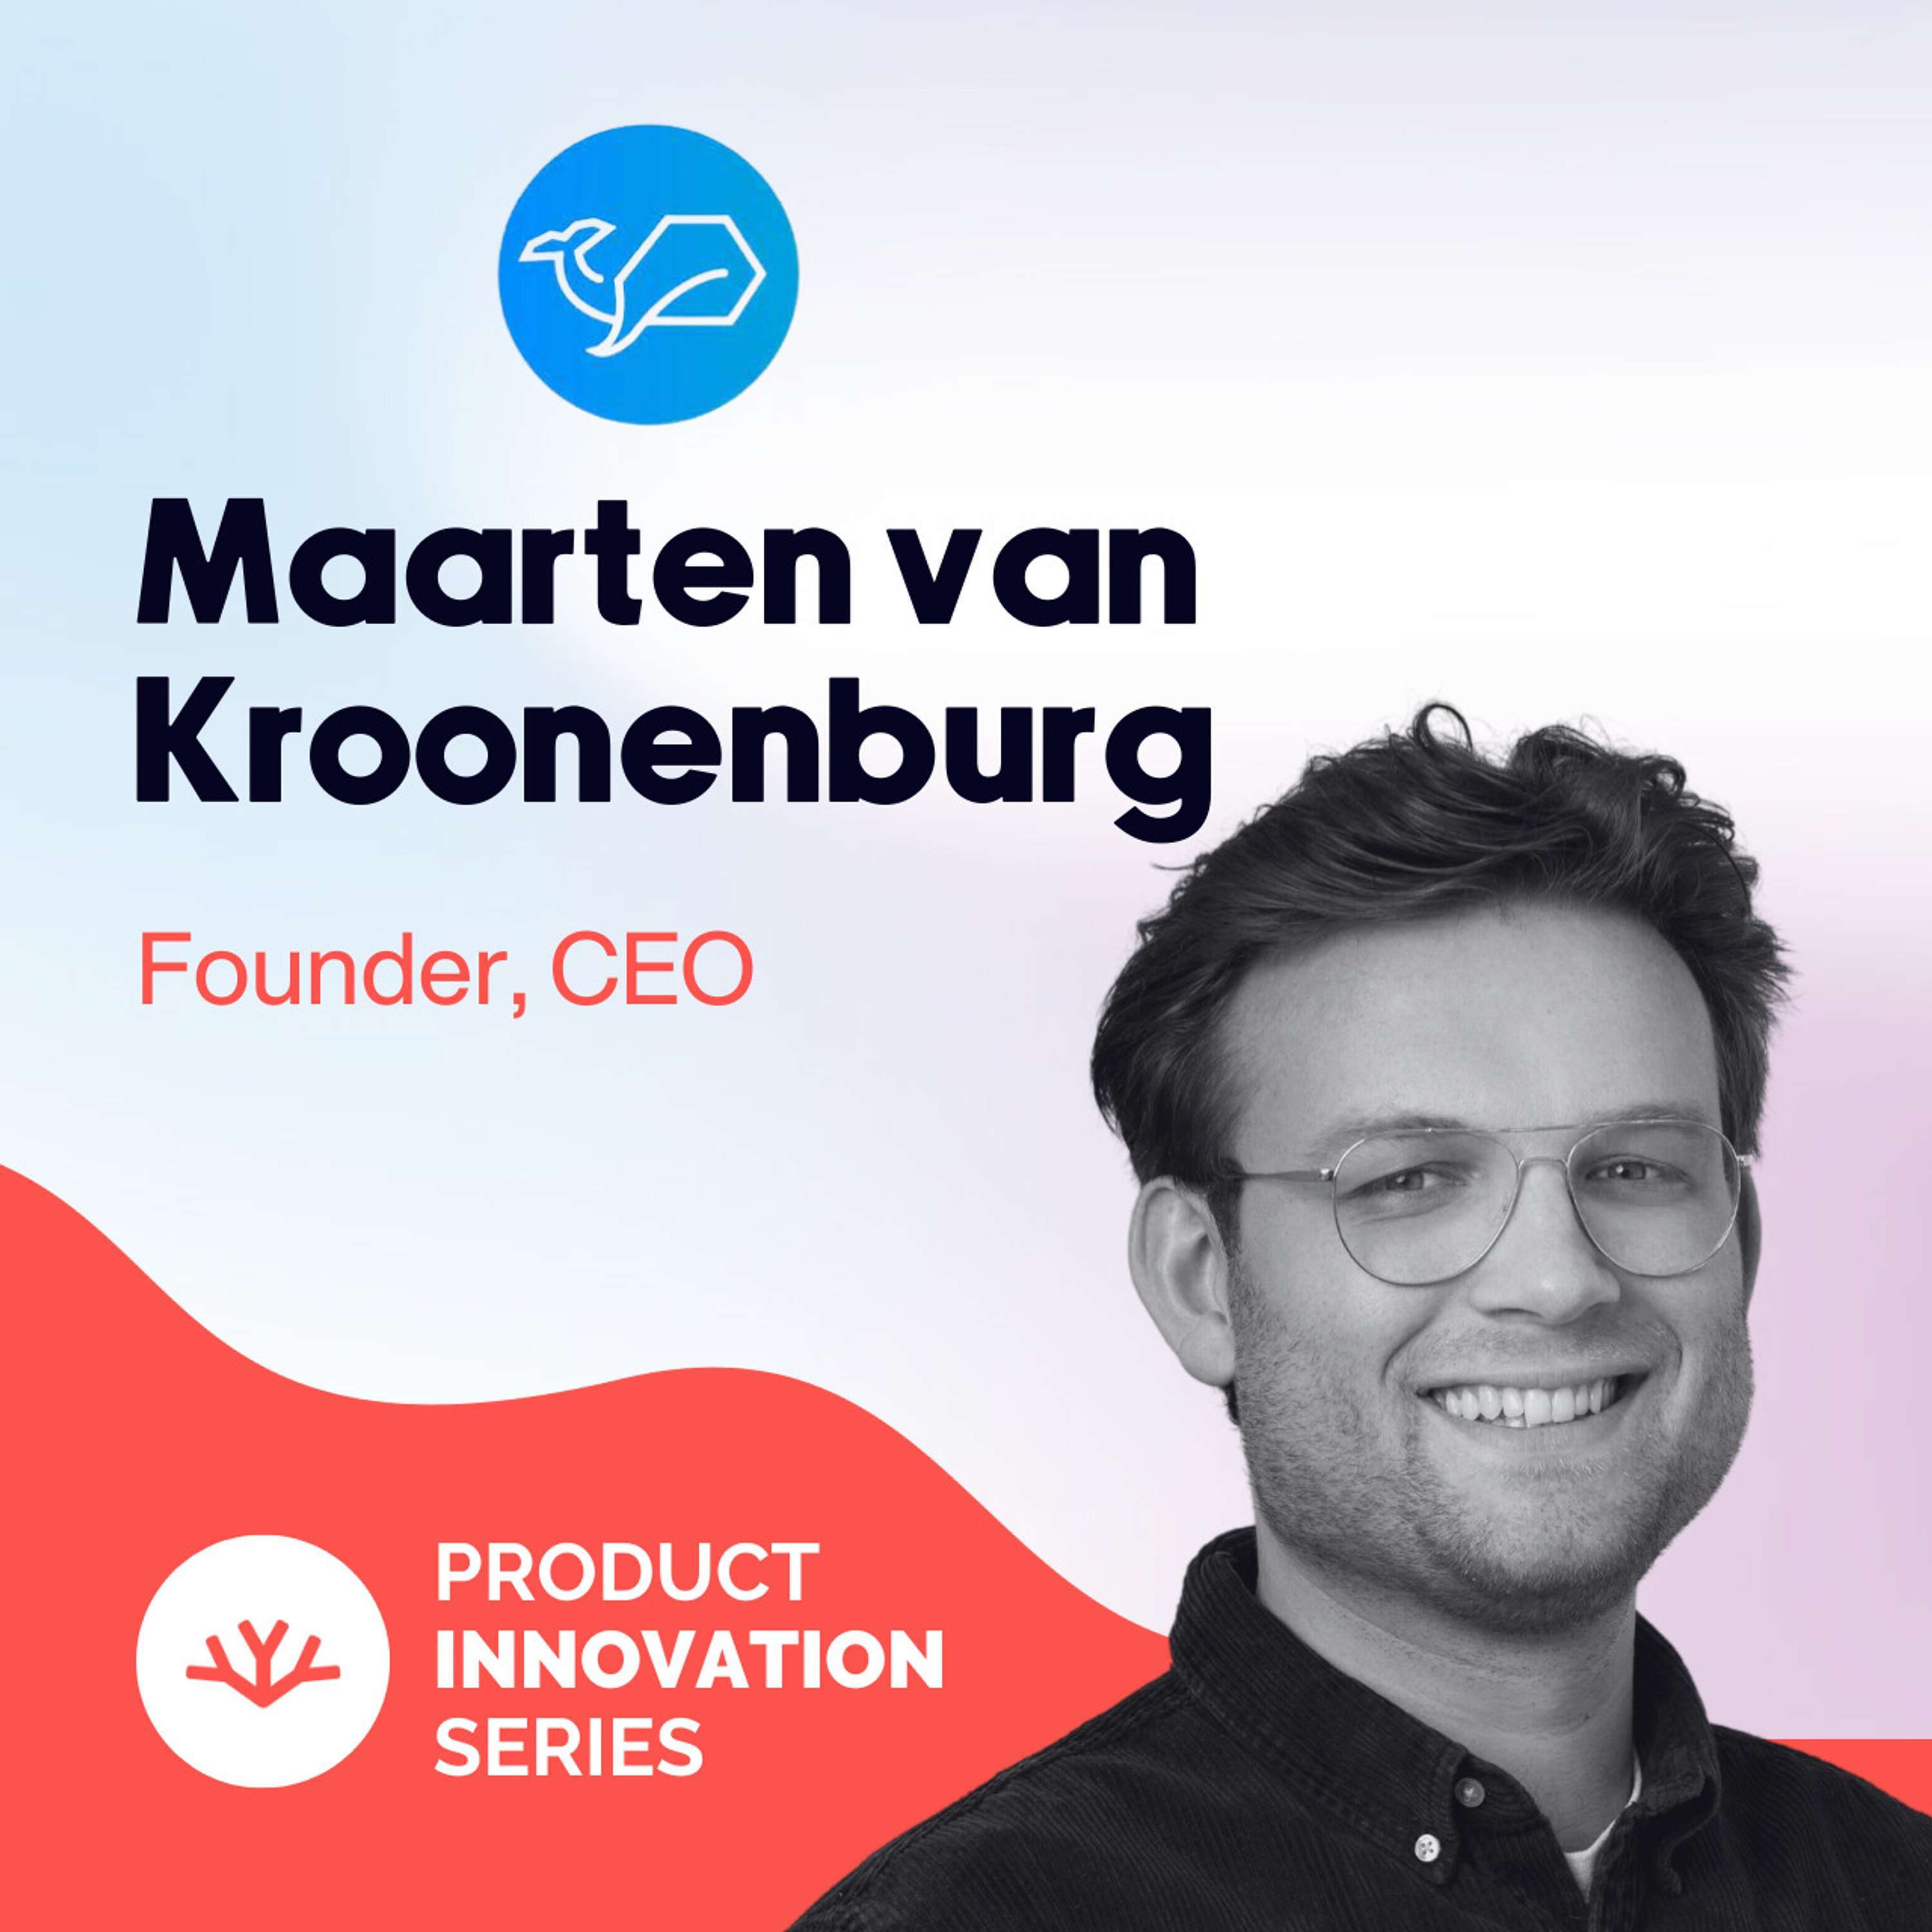 How to Run Successful Enterprise Discovery from Concept to Validation - BW Ventures, Maarten van Kroonenburg